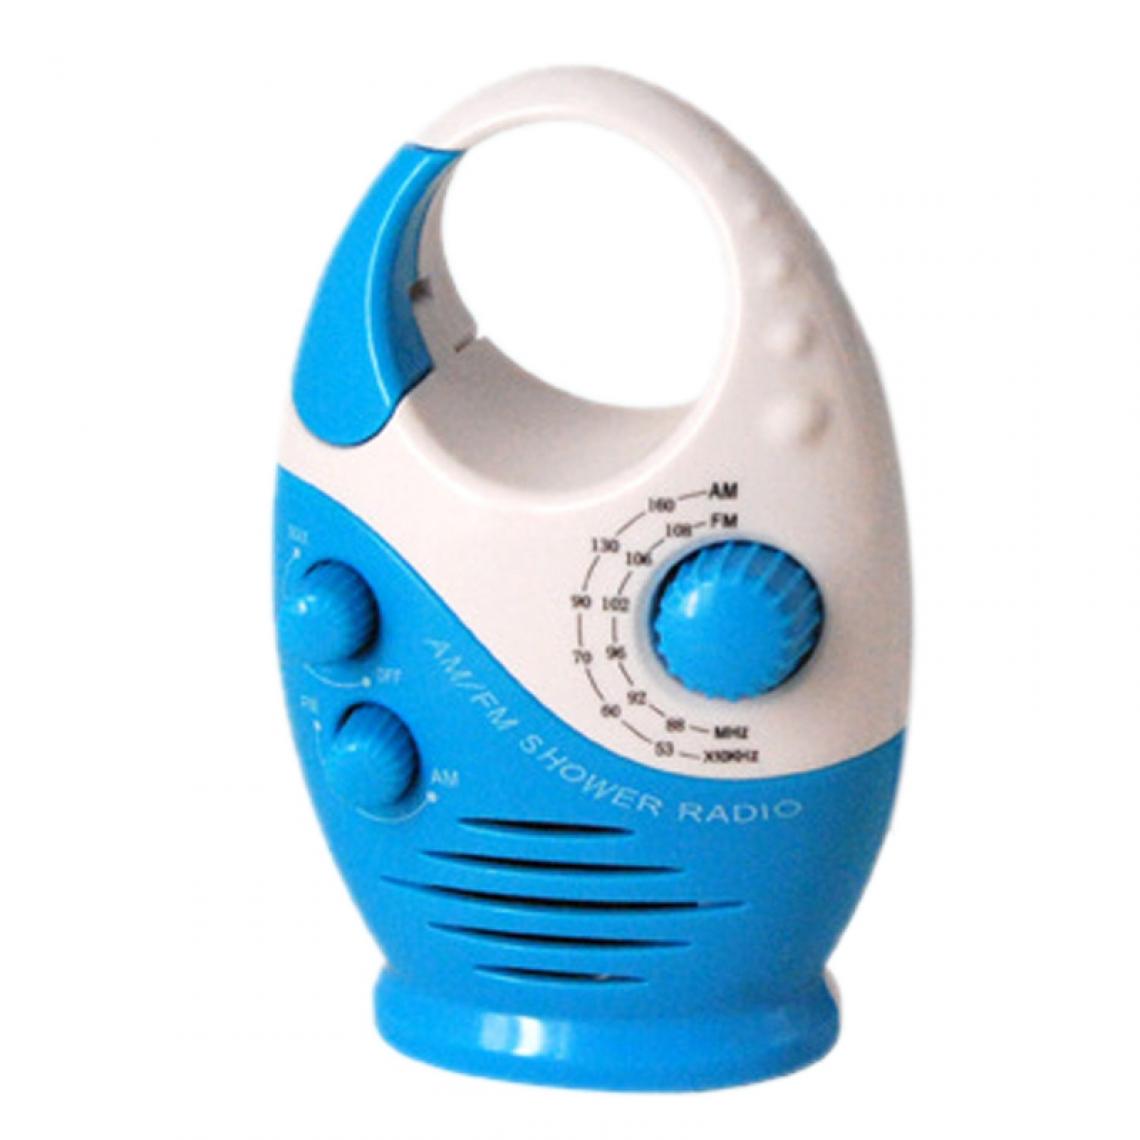 Universal - Radio portable étanche radio salle de bains ventouse crochet radio rechargeable, signal de recherche de voiture(Bleu) - Radio